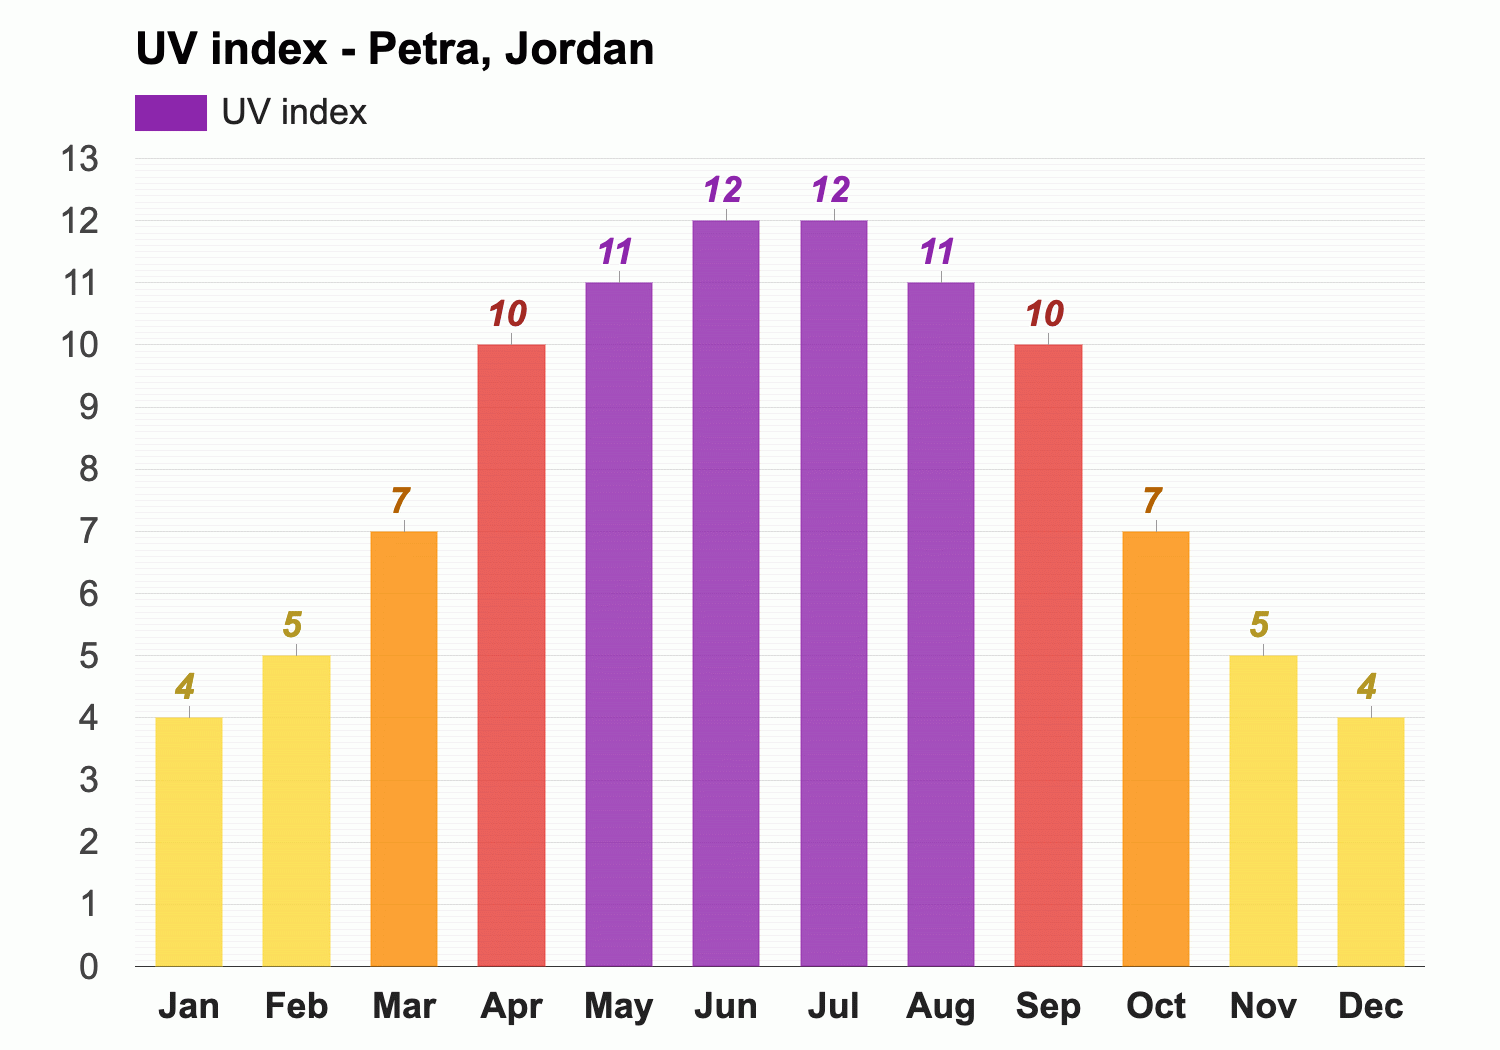 December Weather forecast - Winter forecast - Petra, Jordan